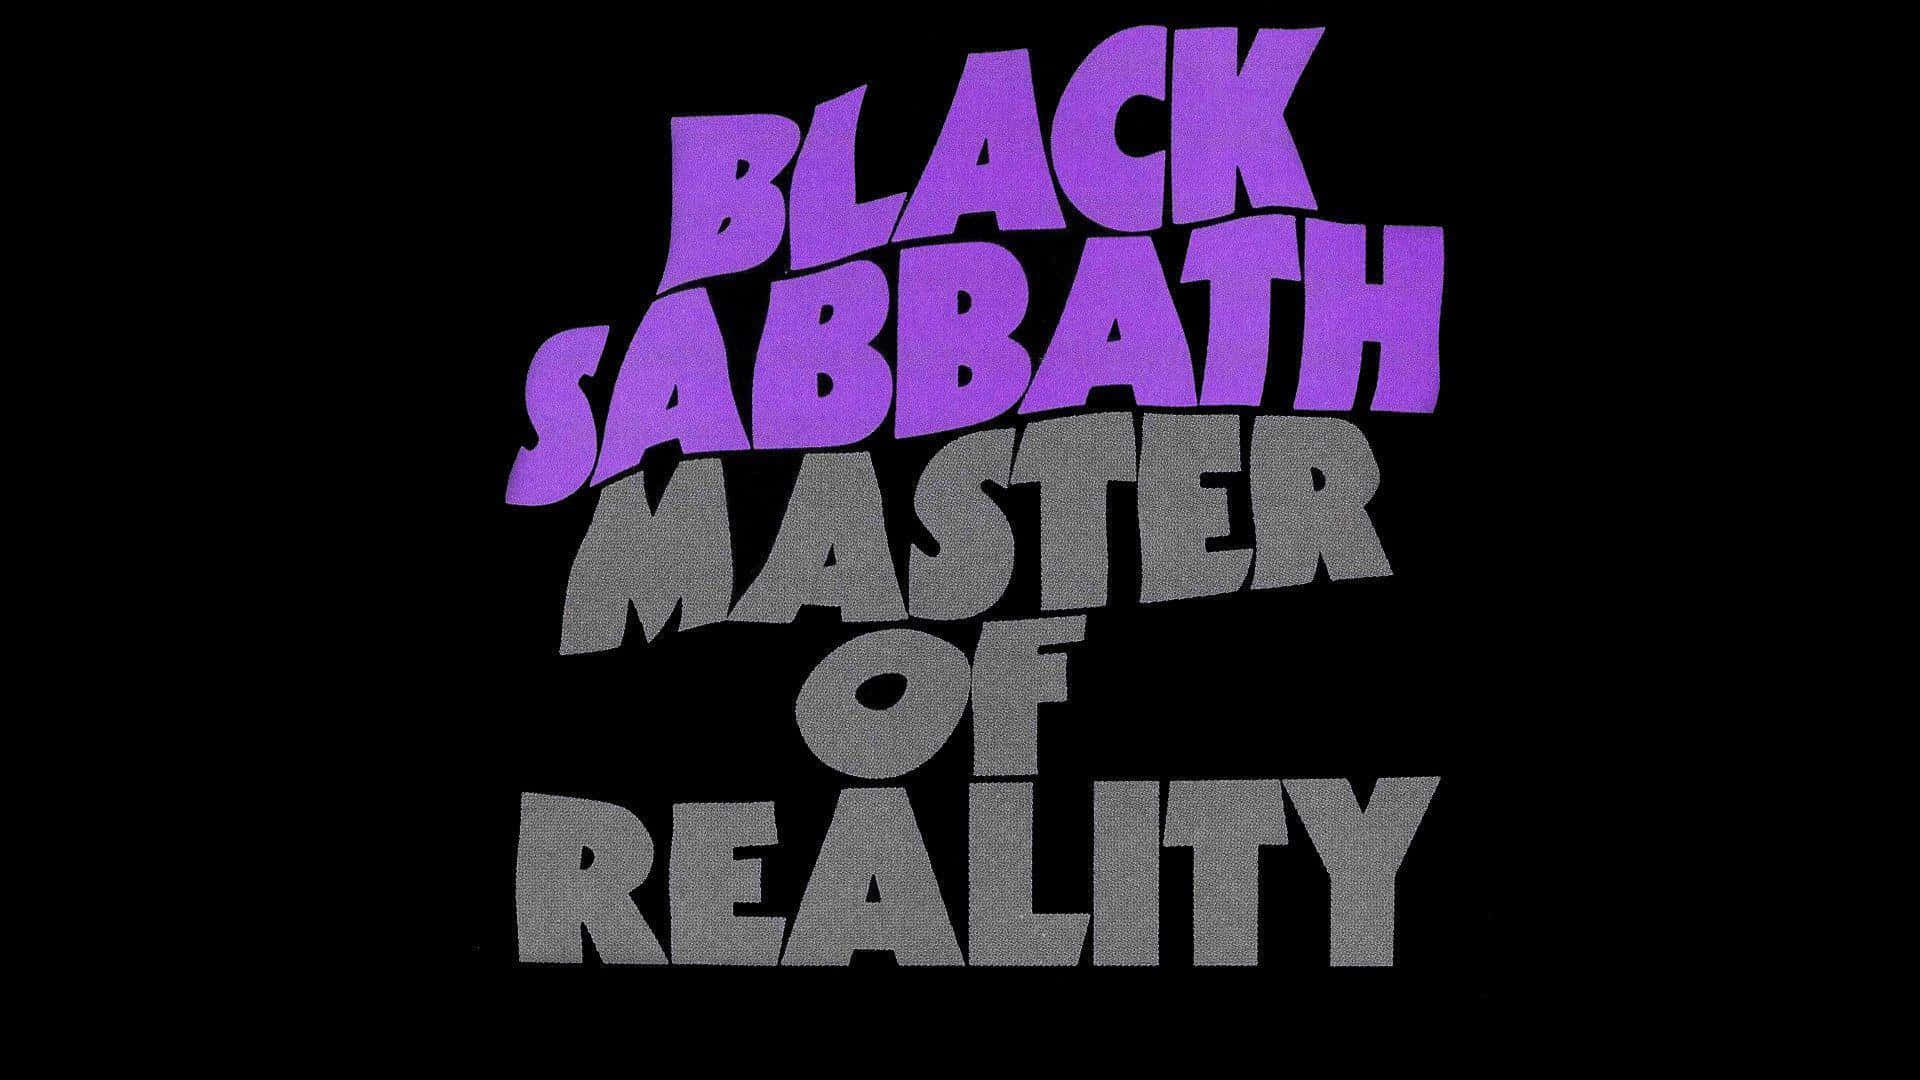 Black Sabbath Masterof Reality Album Cover Wallpaper